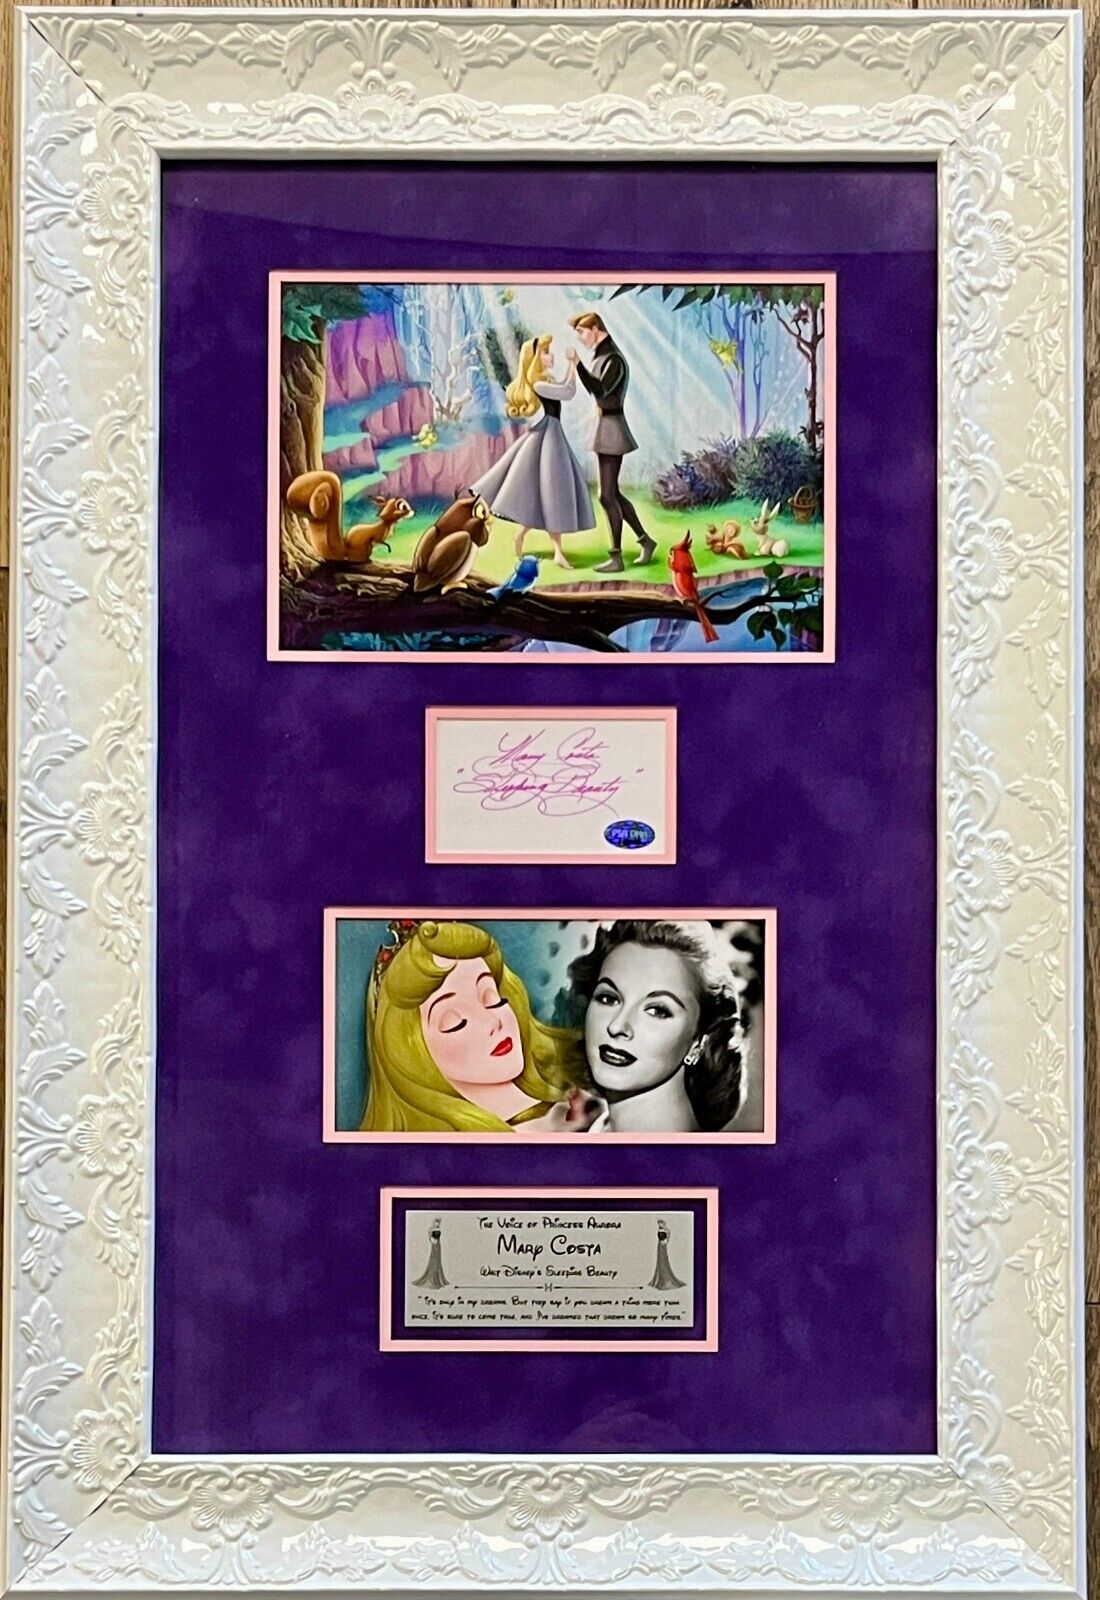 Mary Costa (Voice of Sleeping Beauty) signed custom framed display-PSA